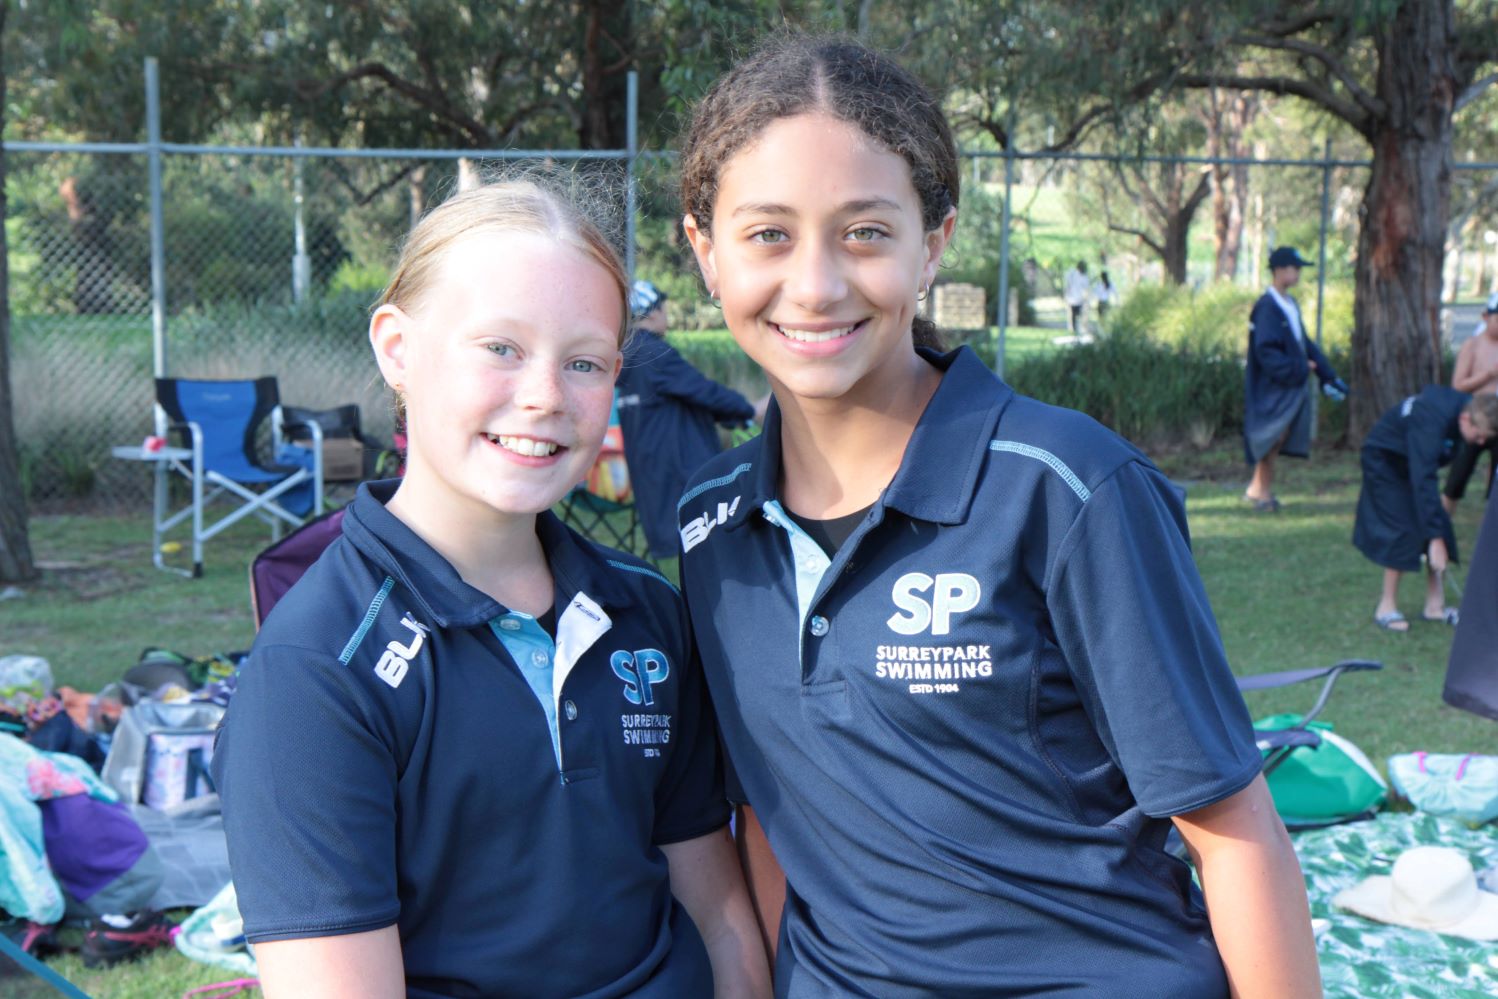 Two girls in Surrey Park uniform, smiling